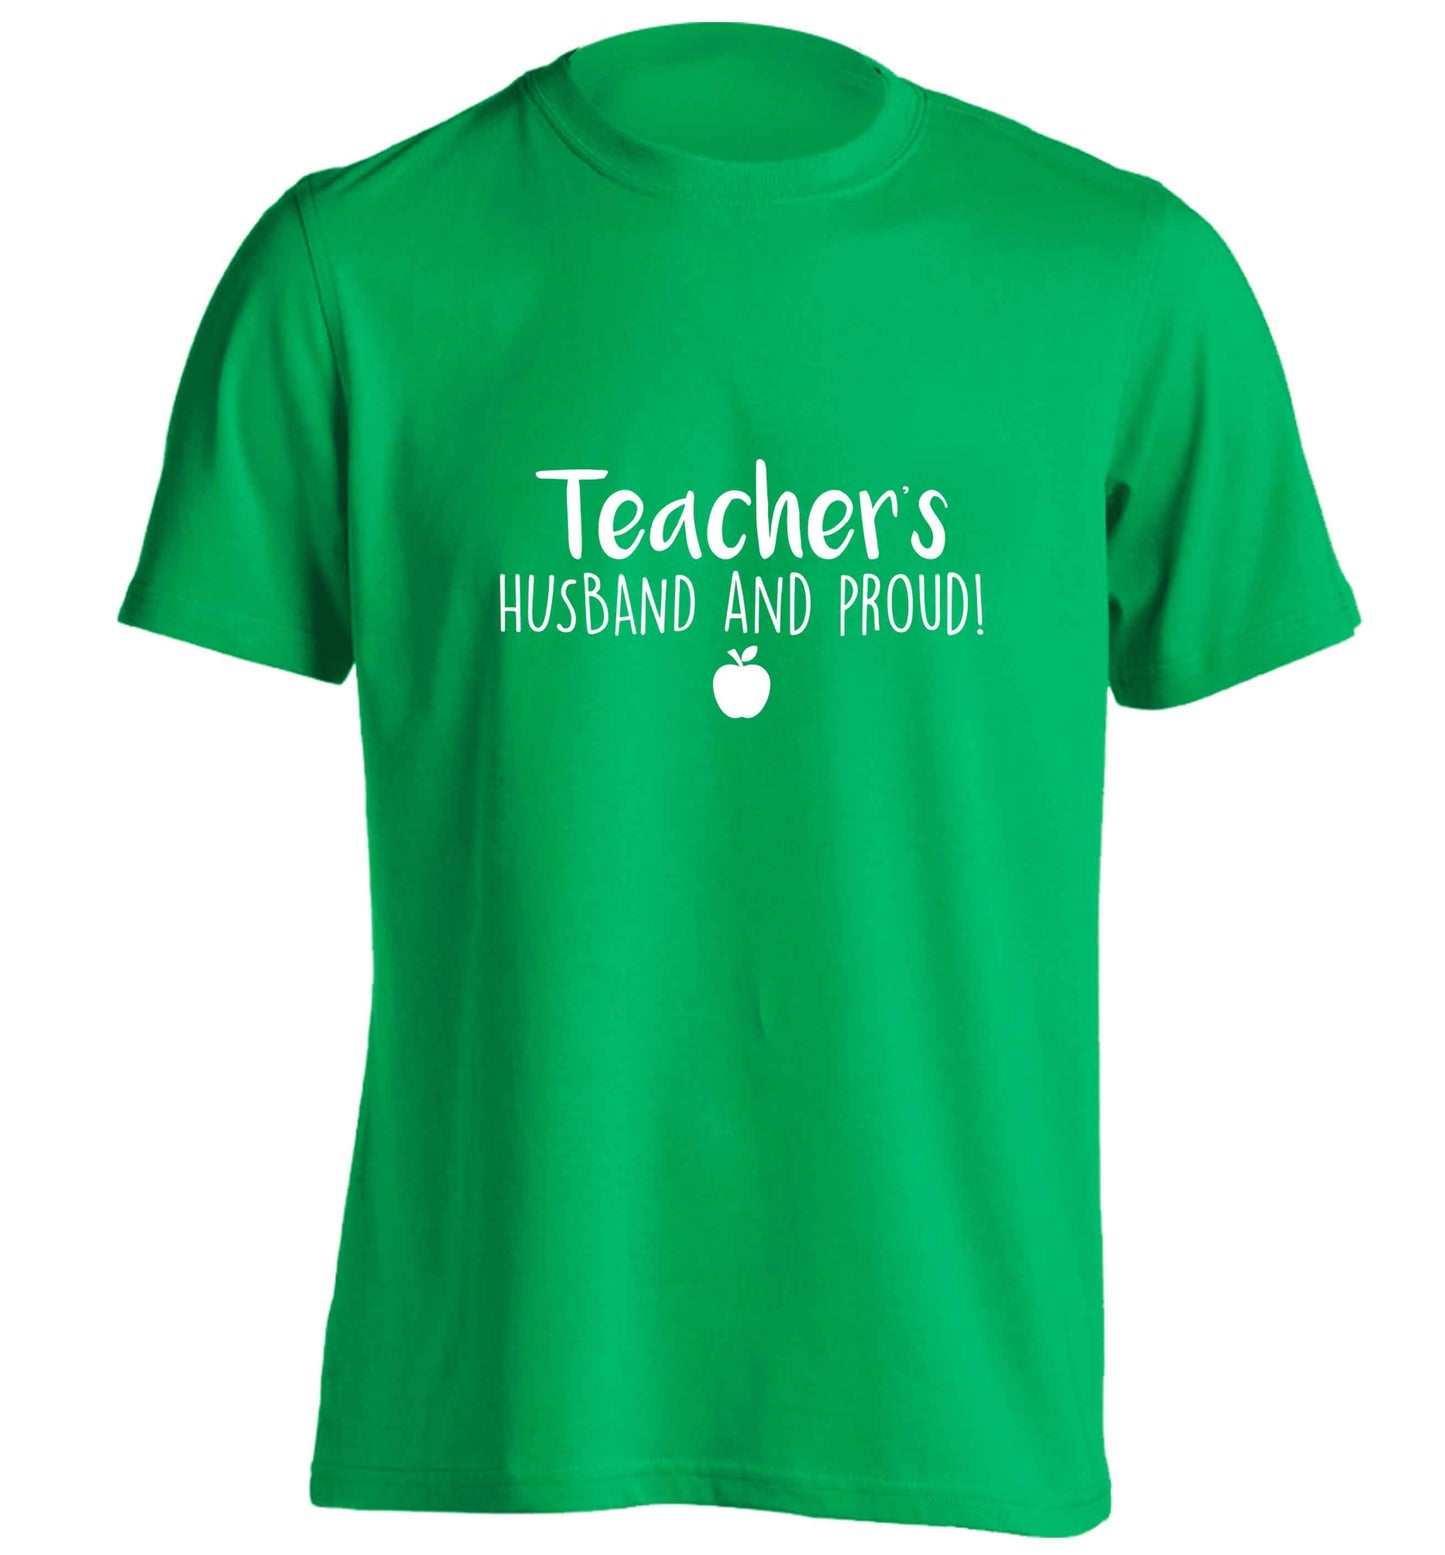 Teachers husband and proud adults unisex green Tshirt 2XL